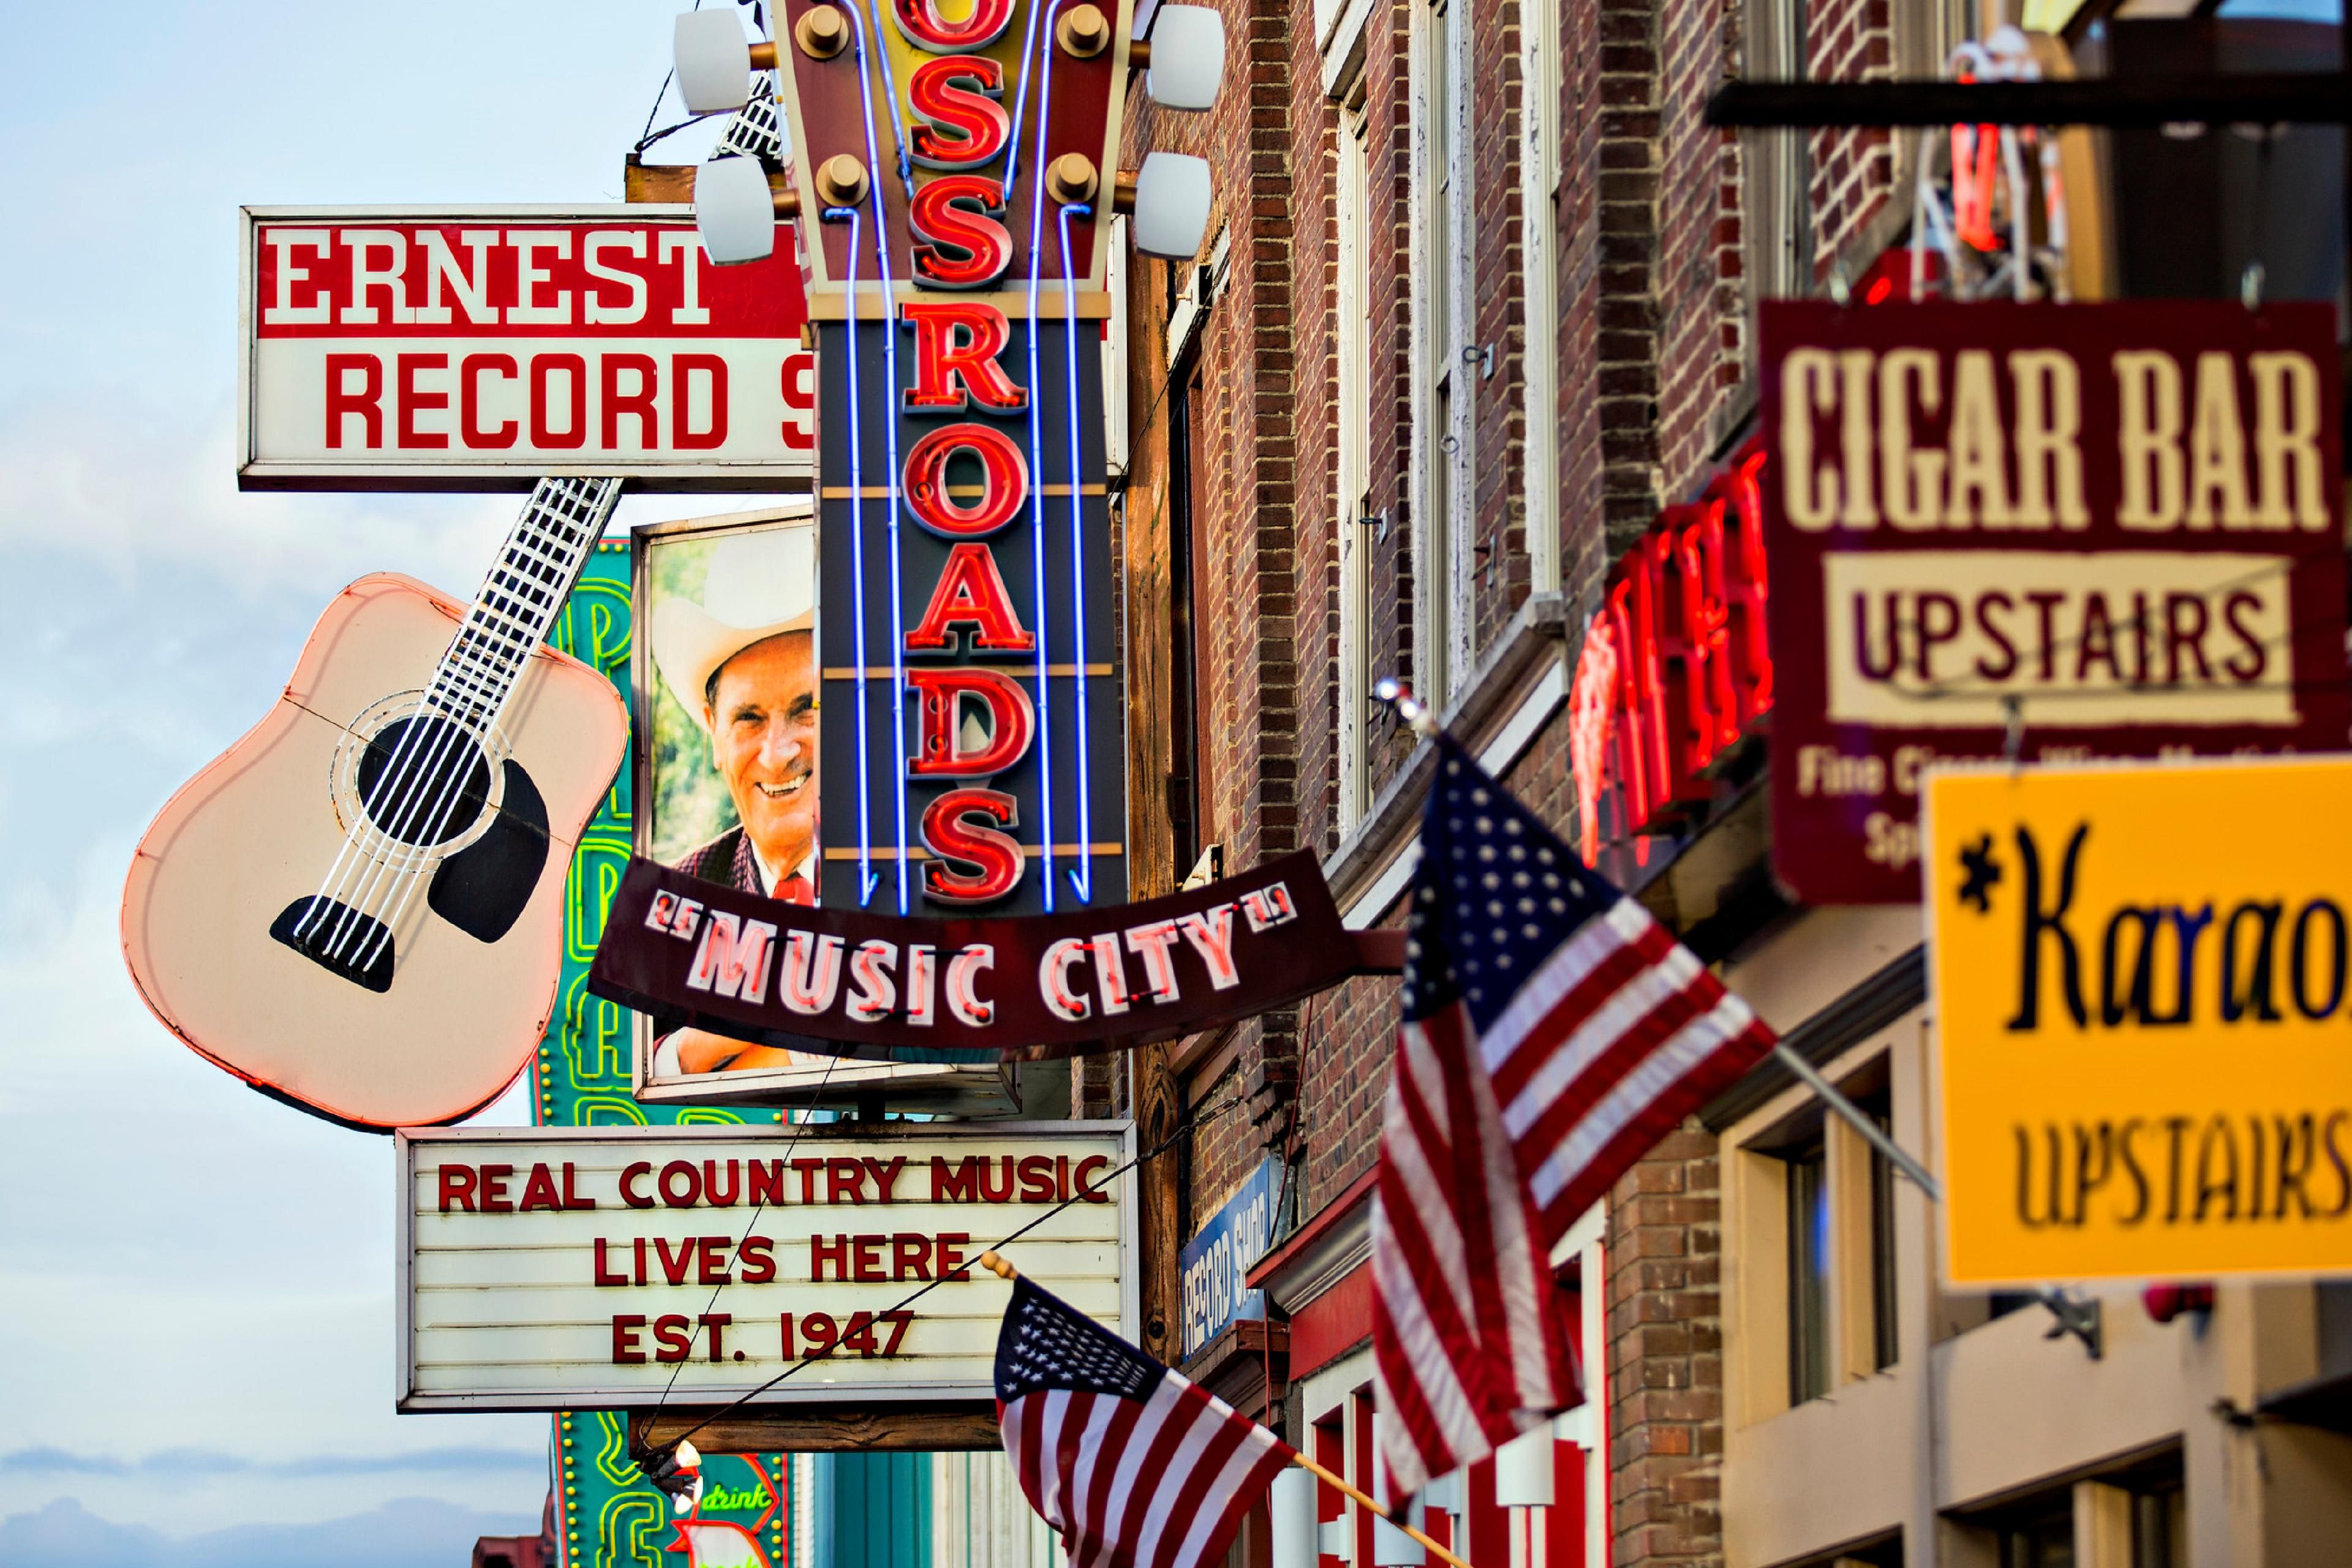 Downtown Nashville's Music Row